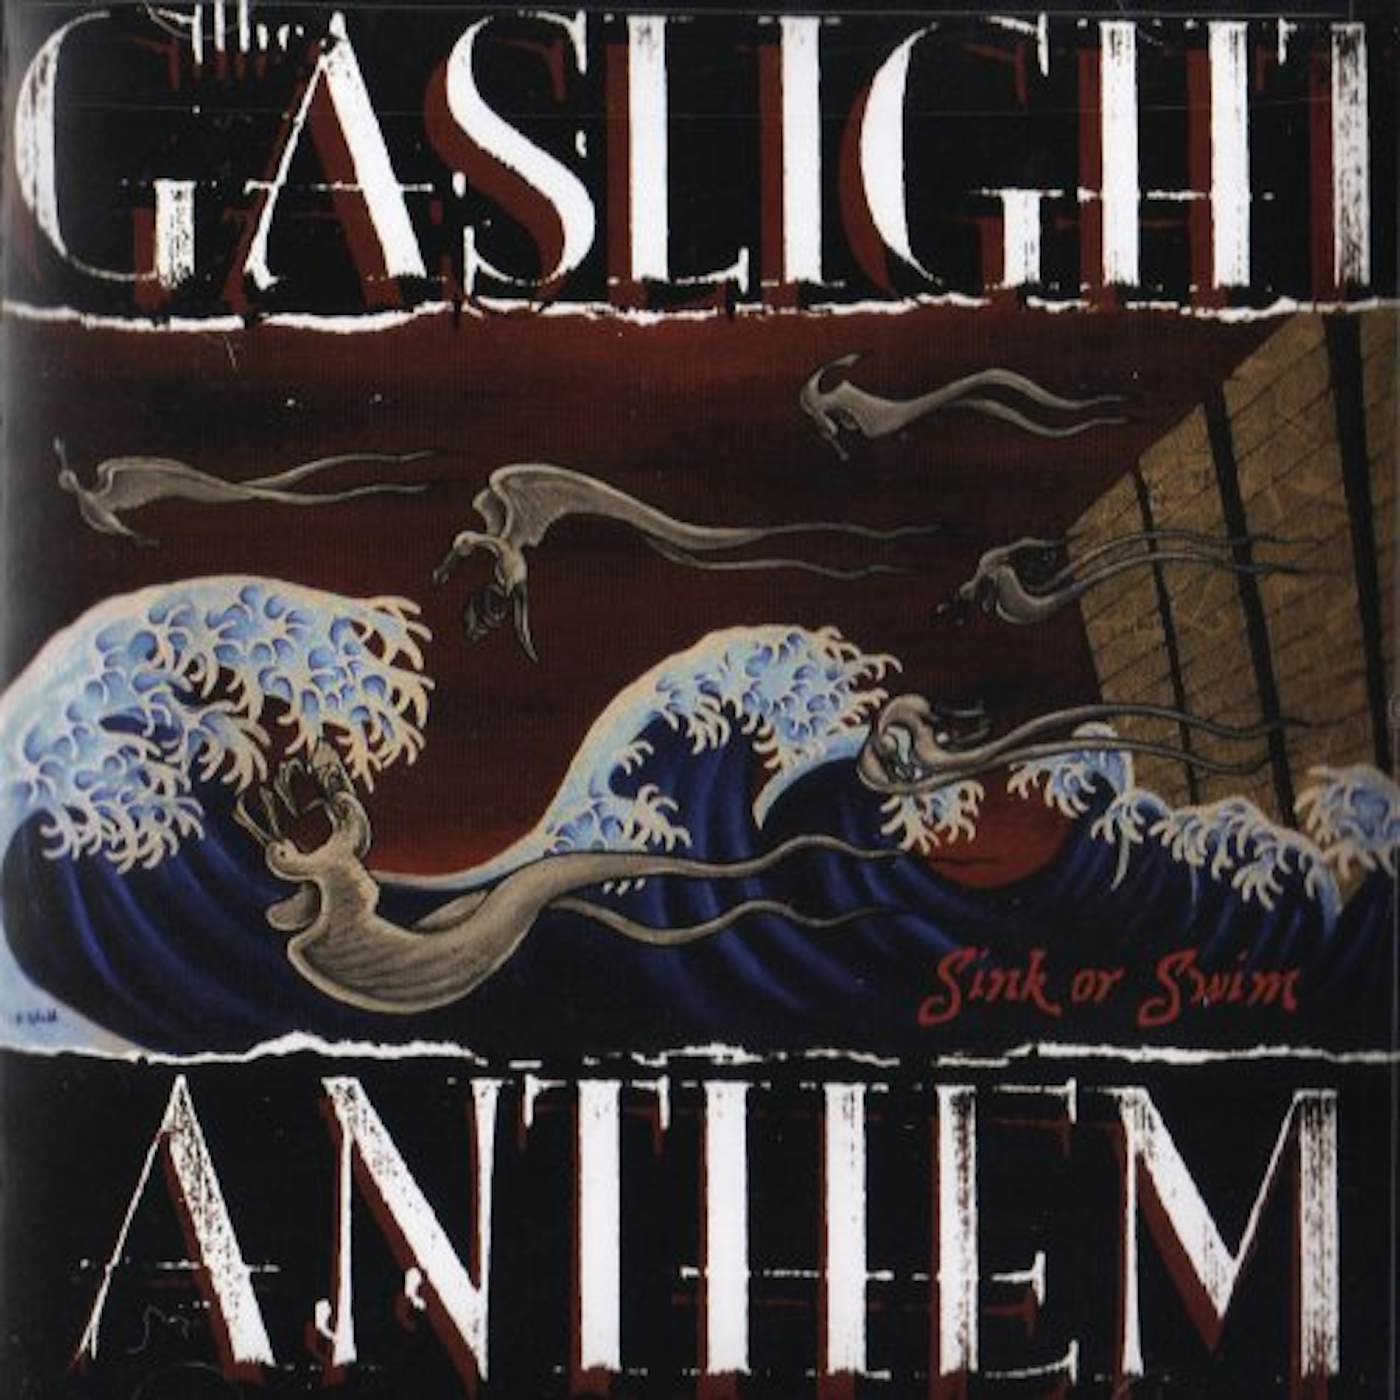 The Gaslight Anthem SINK OR SWIM CD